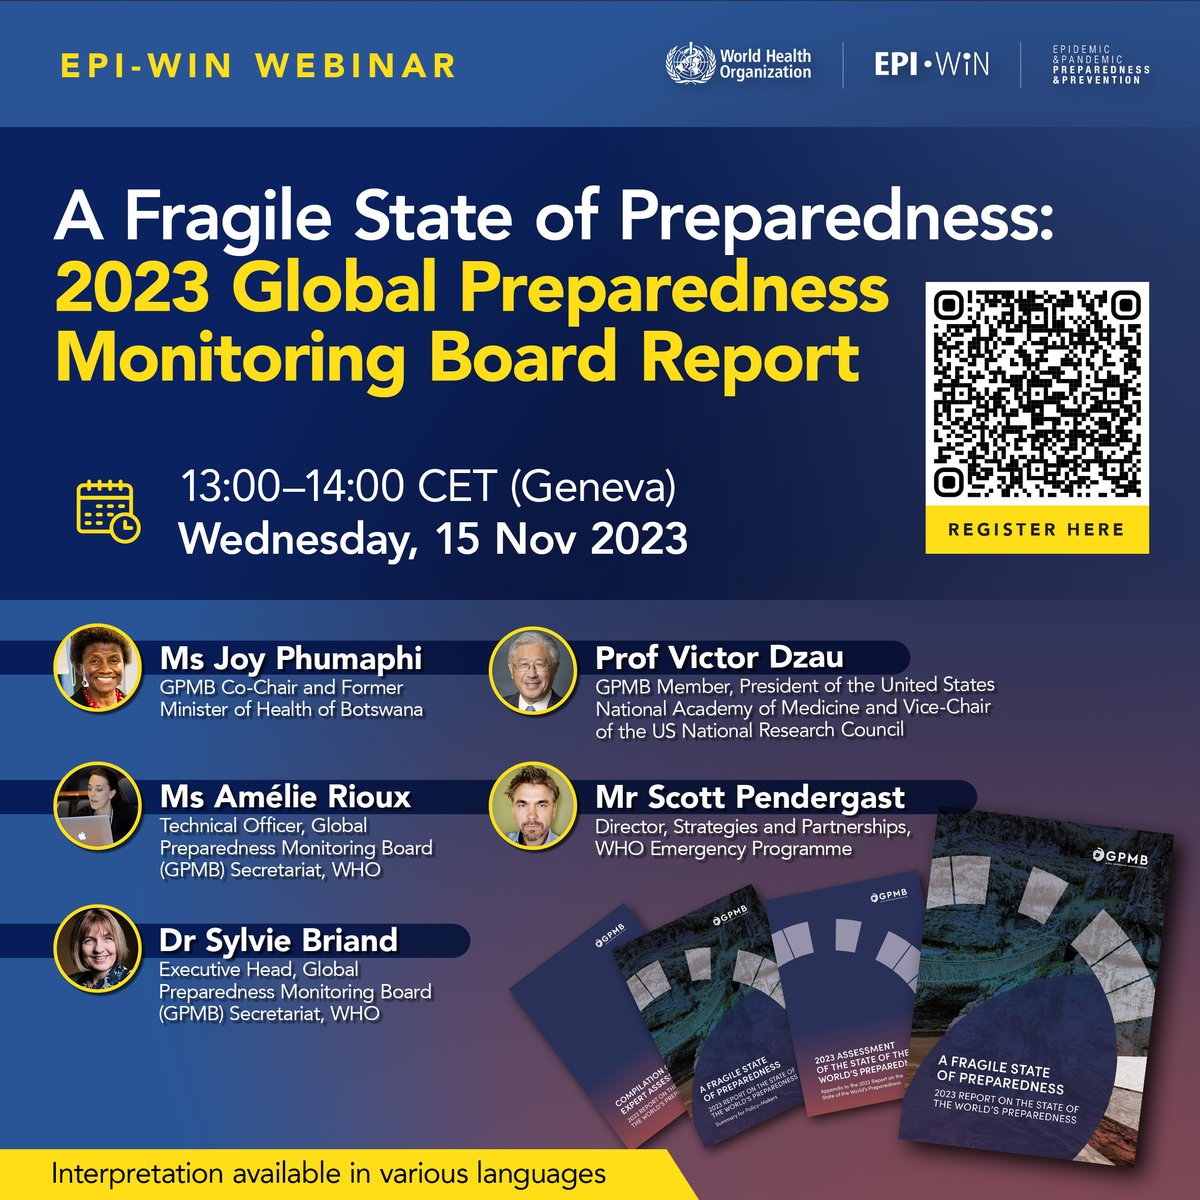 join us on Wednesday 15 November for the #EPIWIN webinar 'what's new in #pandemic preparedness'